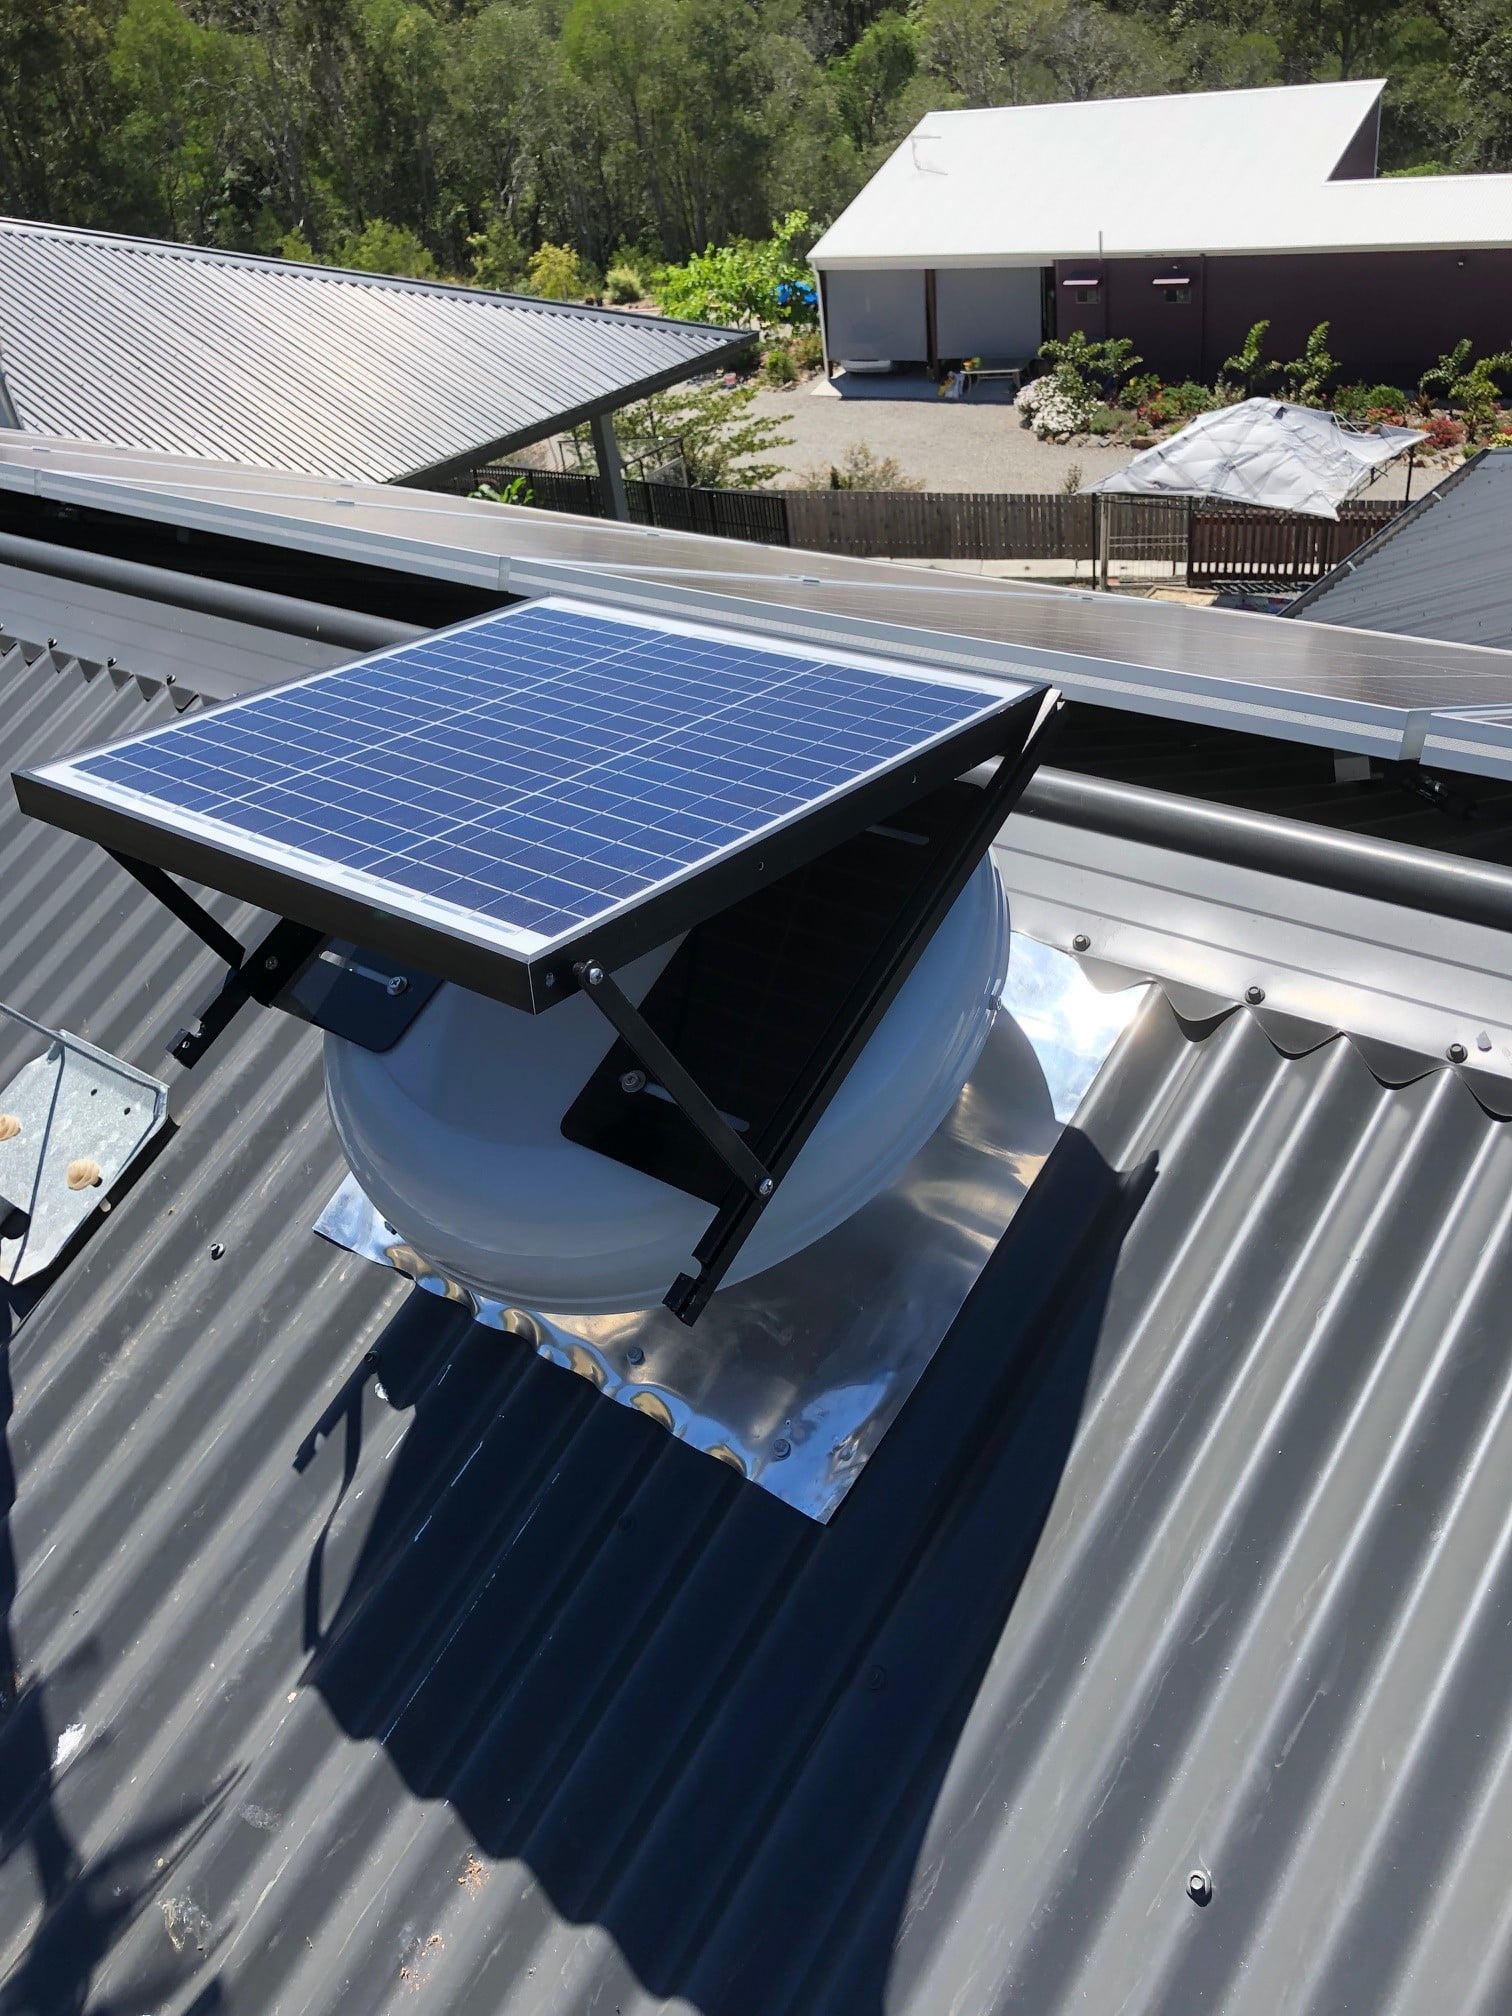 solar attic fan installed in a tin roof